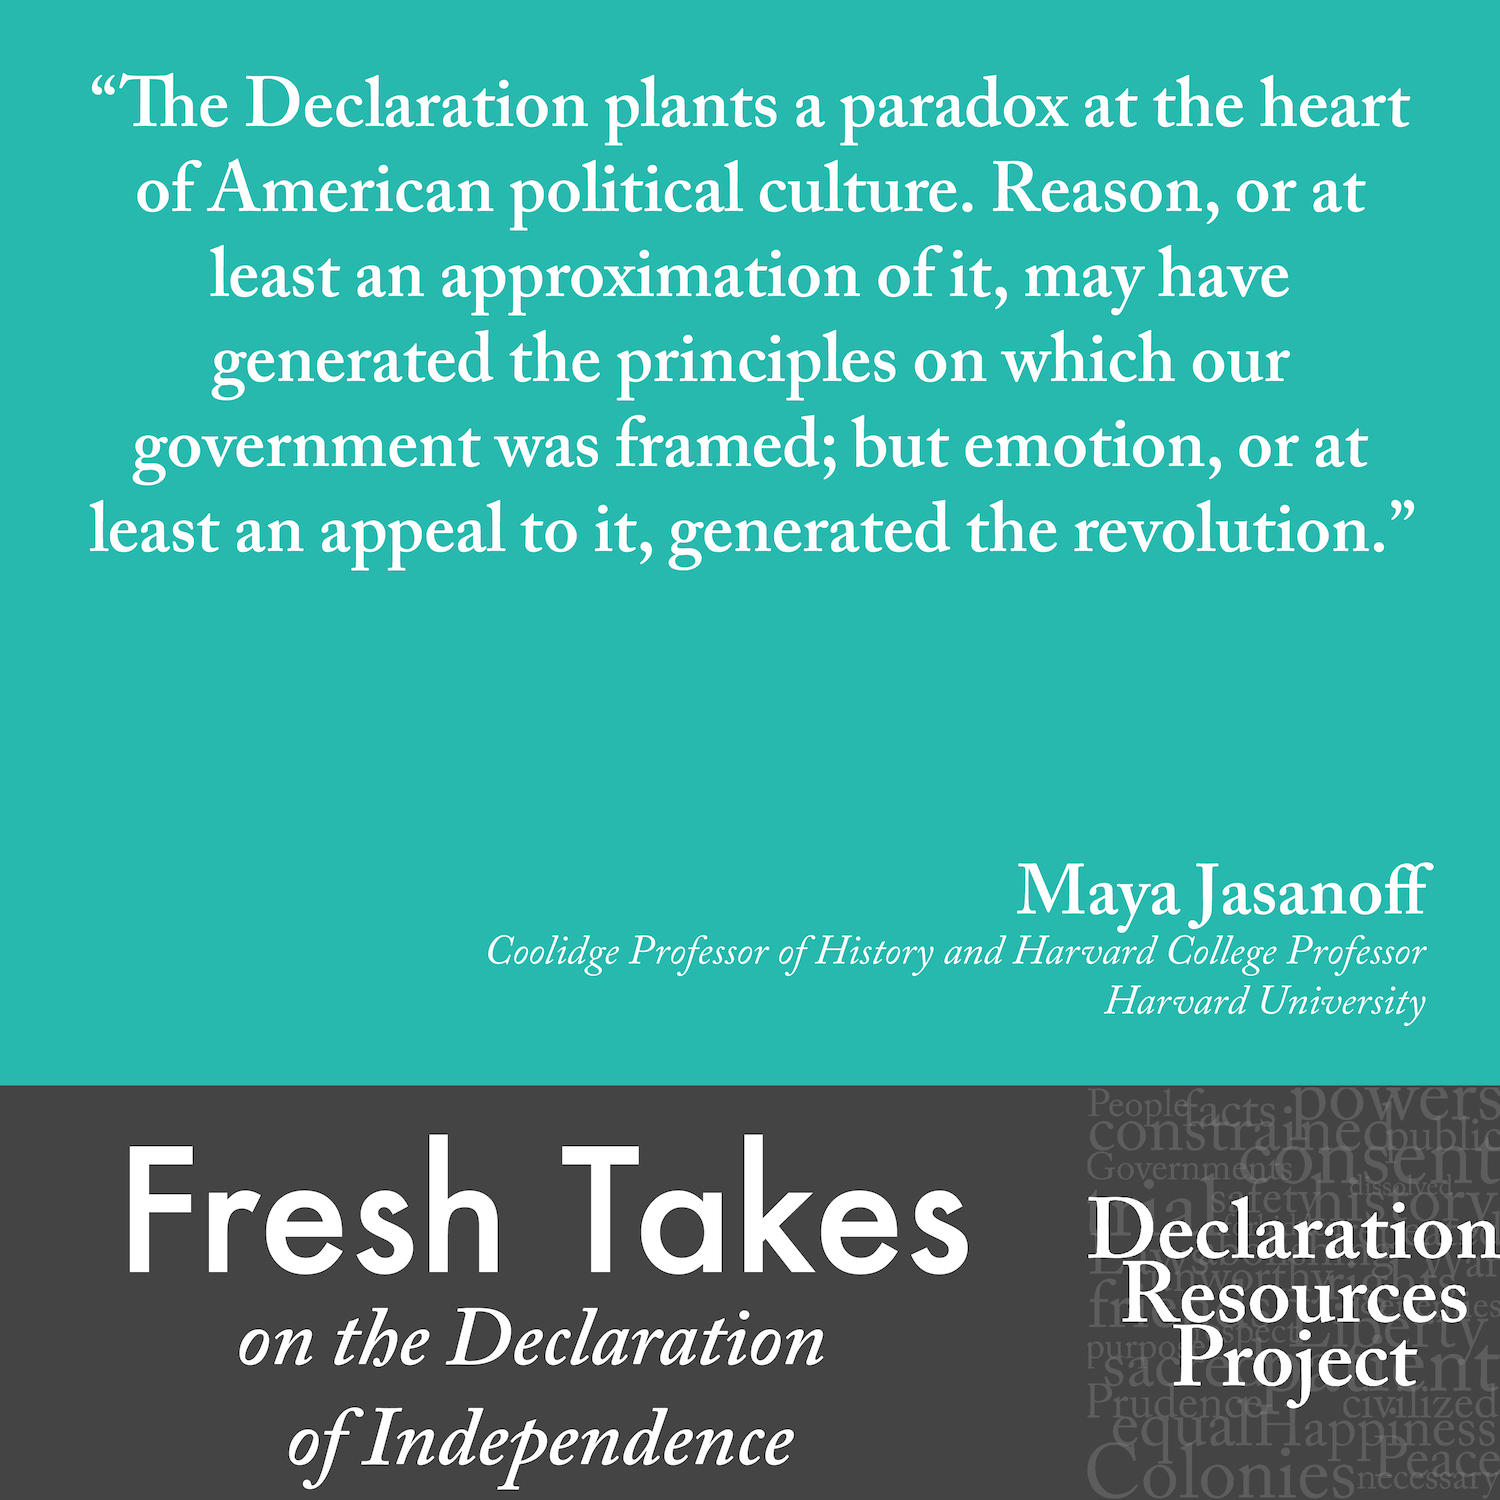 Maya Jasanoff's Fresh Take on the Declaration of Independence